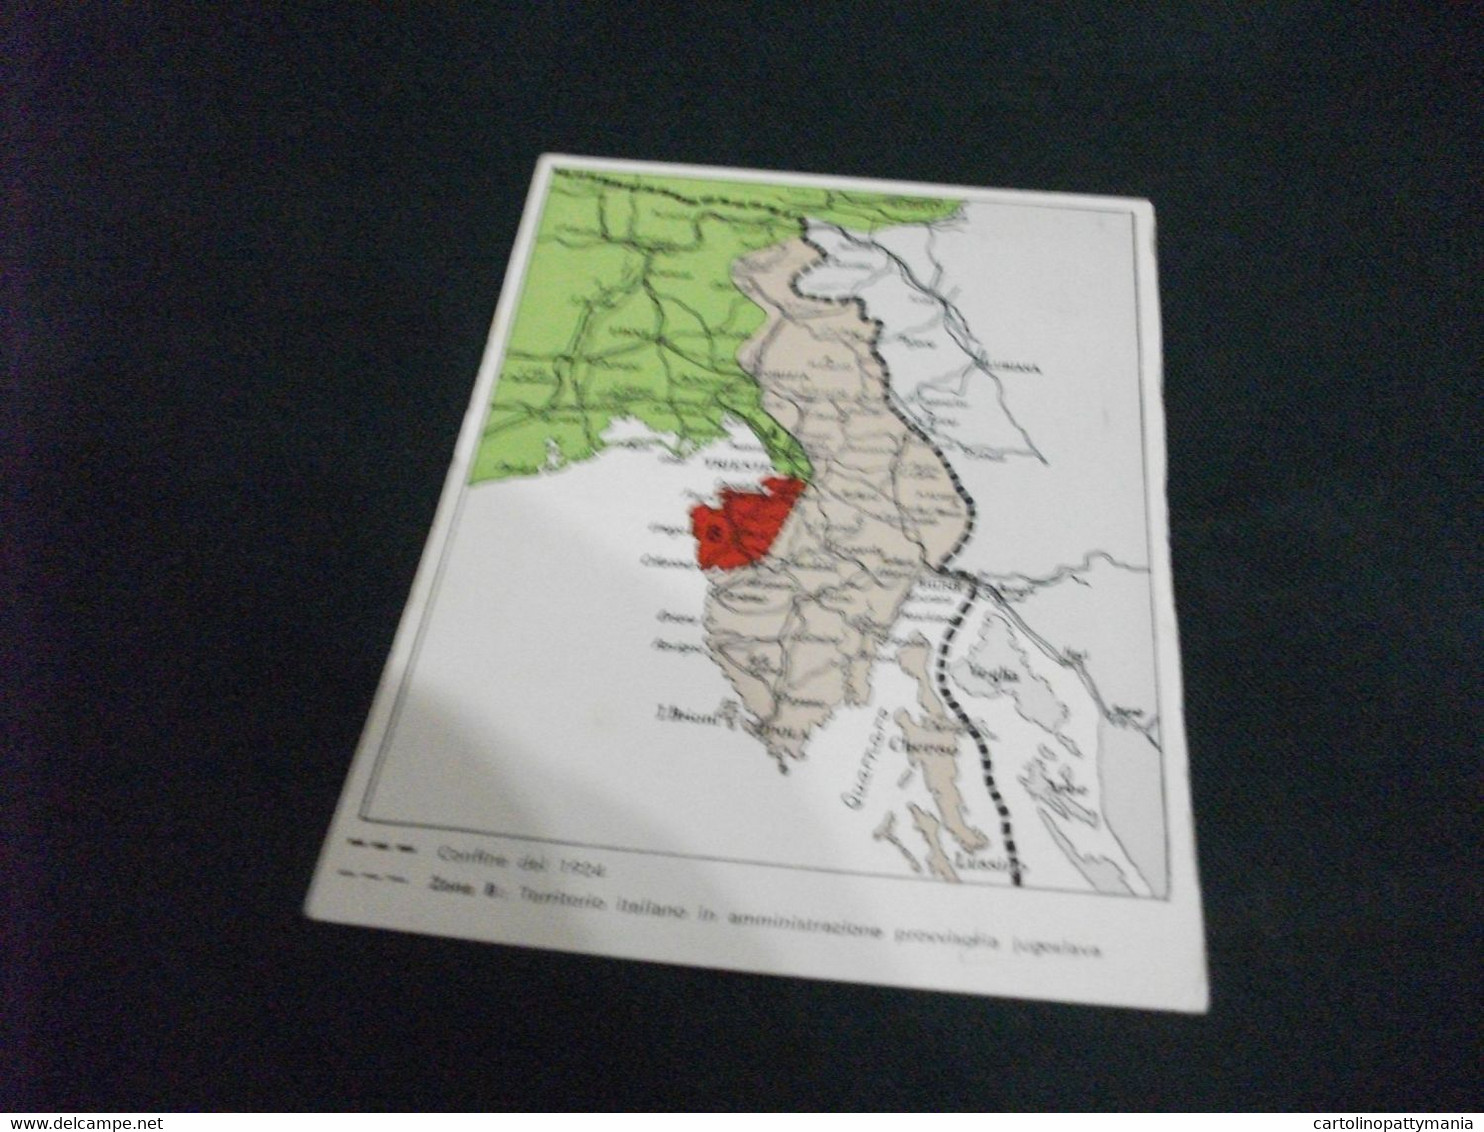 Maps - CARTA GEOGRAFICA MAP GEOGRAPHISCHE KARTE CARTE GÉOGRAPHIQUE ZONA B  DELL'ISTRIA UNITI E VIGILI SOVRANITA' ITALIA TRIESTE